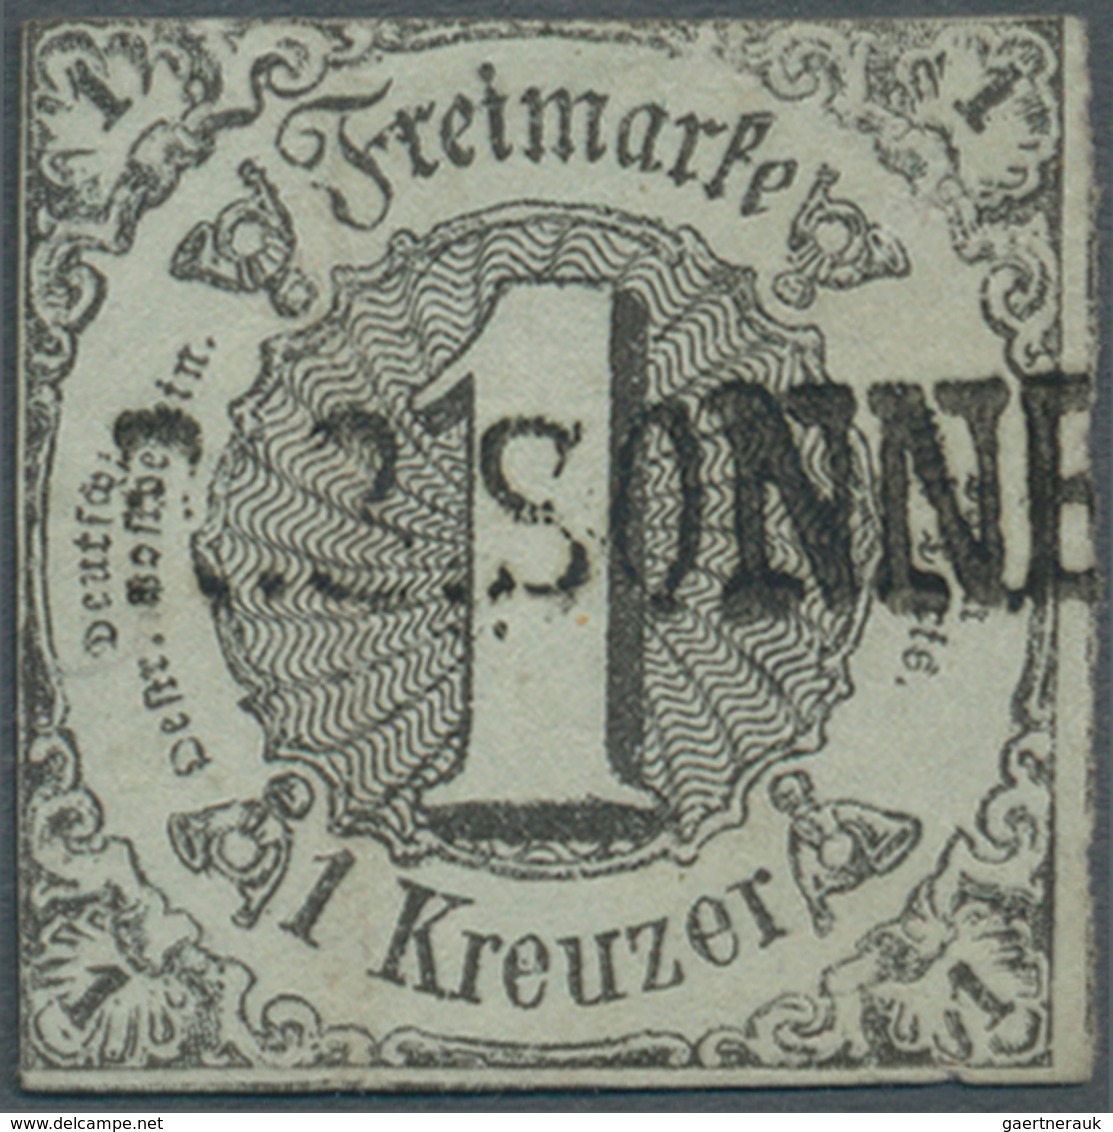 Thurn & Taxis - Marken Und Briefe: 1852, 1 Kr. Schwarz A. Graugrün Mit 1807 Rayon-L1 "R.3.SONNE(NBER - Autres & Non Classés